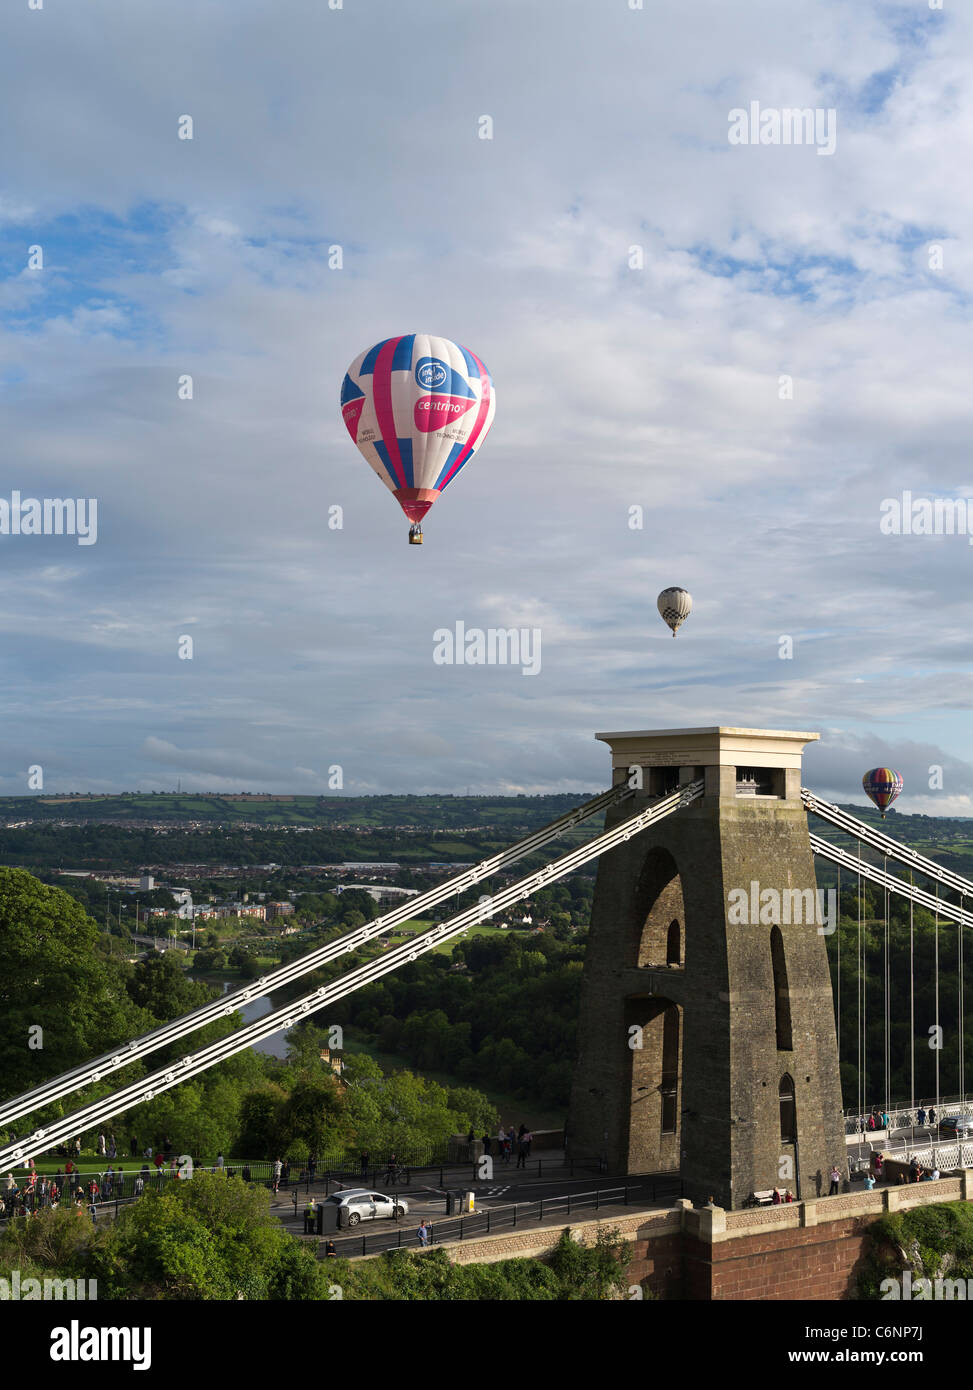 dh Balloon festival internazionale CLIFTON BRISTOL volo mongolfiere Sopra il ponte sospeso uk fiesta Inghilterra UK Foto Stock